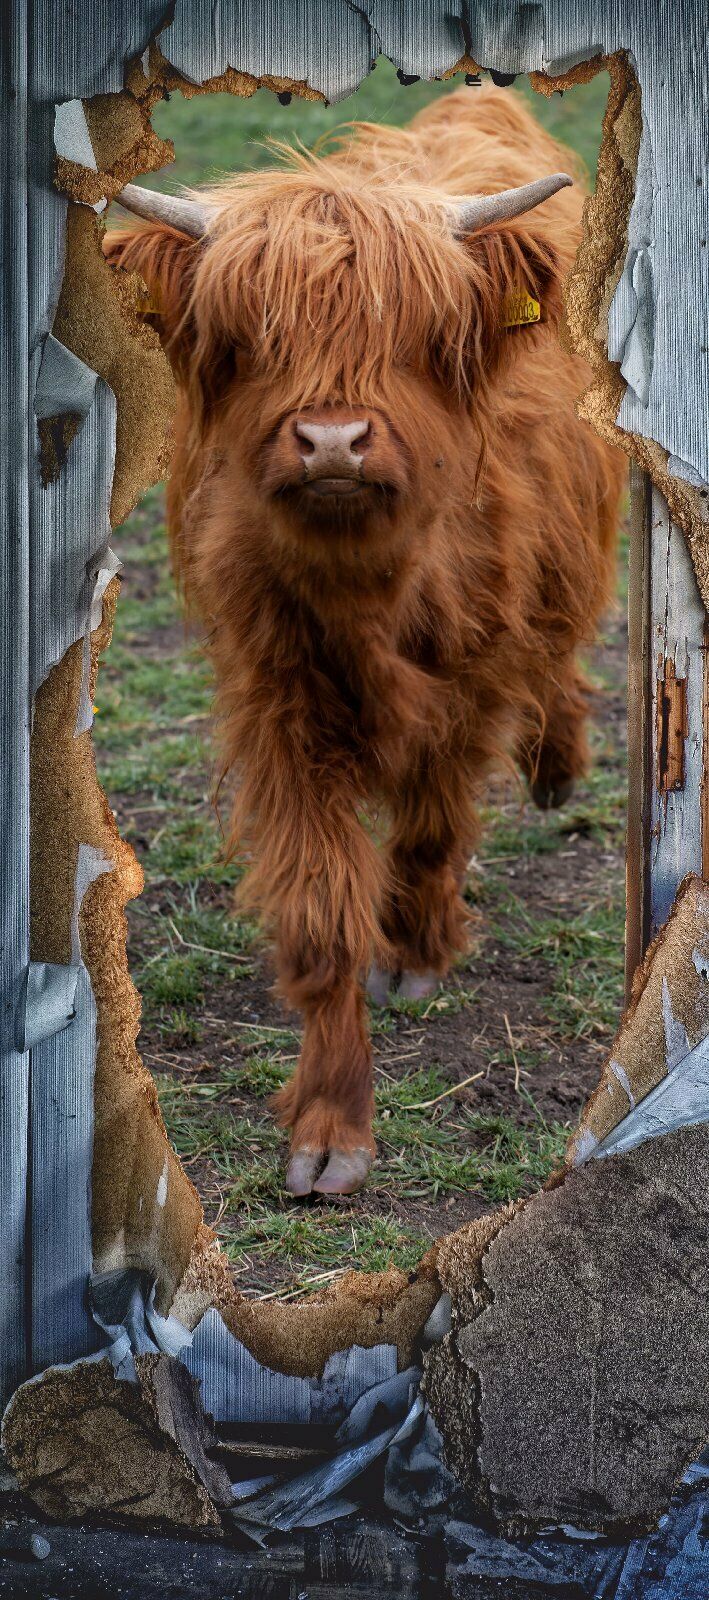 Türposter Kuh Rind Vieh Highland Tapete selbstklebend  200x90cm 9013